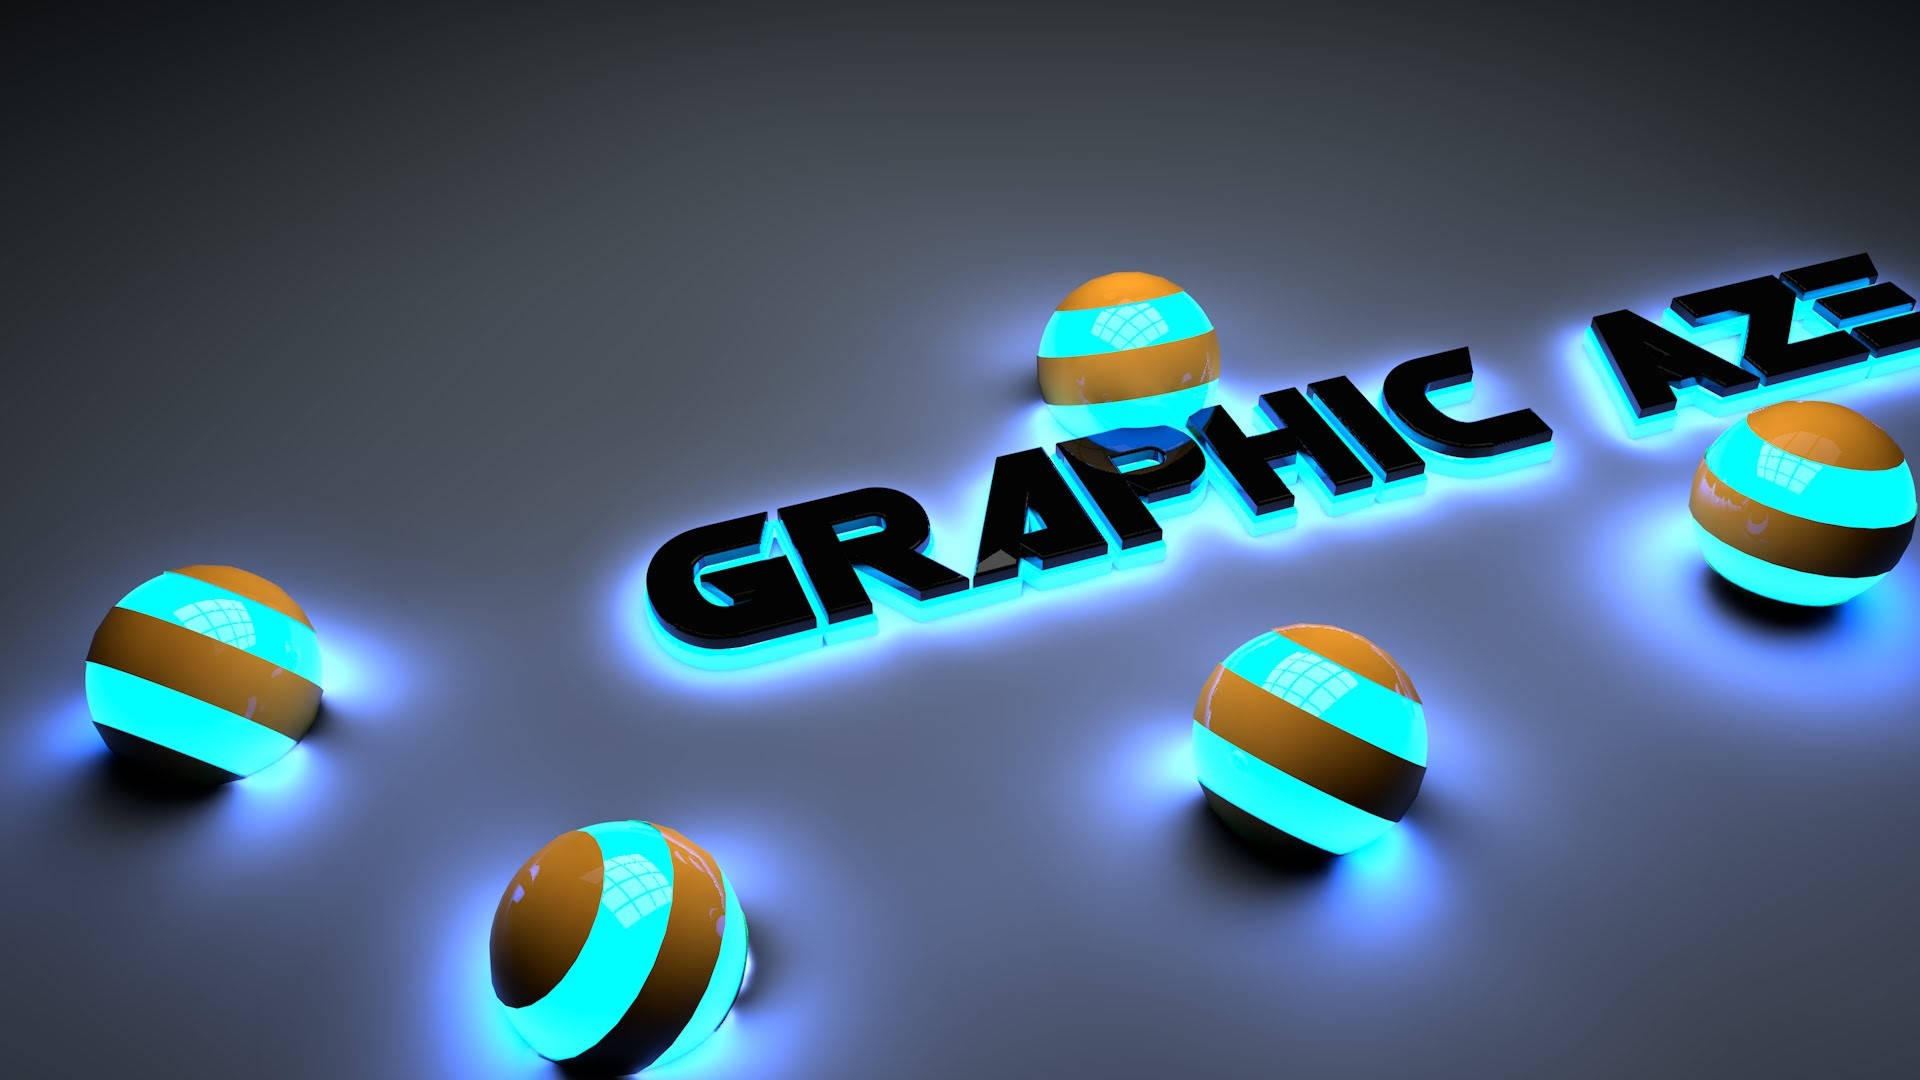 Luminous 4d Graphic Art Wallpaper